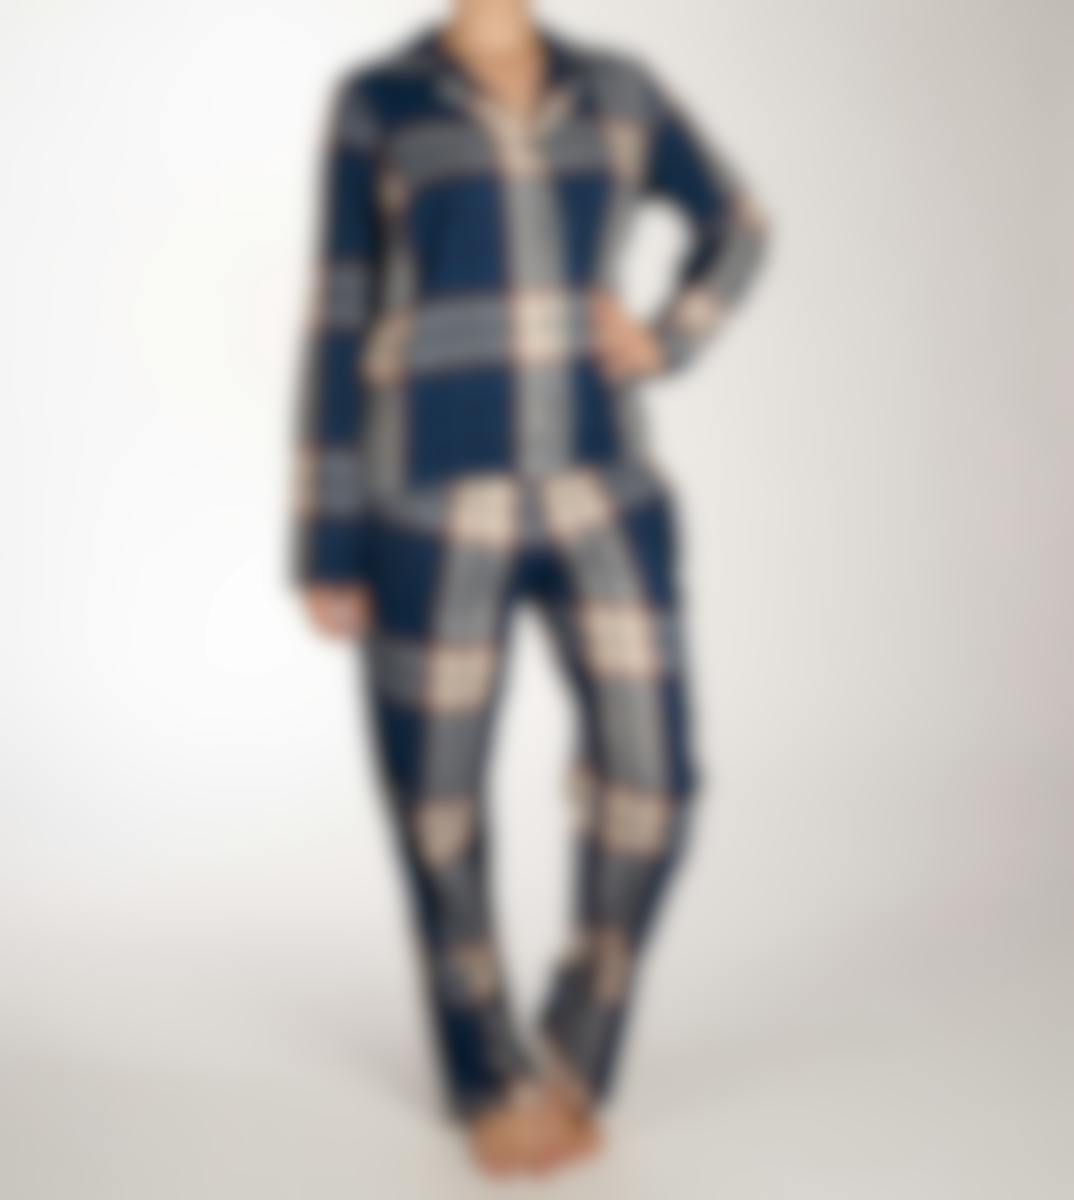 Tommy Hilfiger pyjama pantalon long Full Flannel Set D